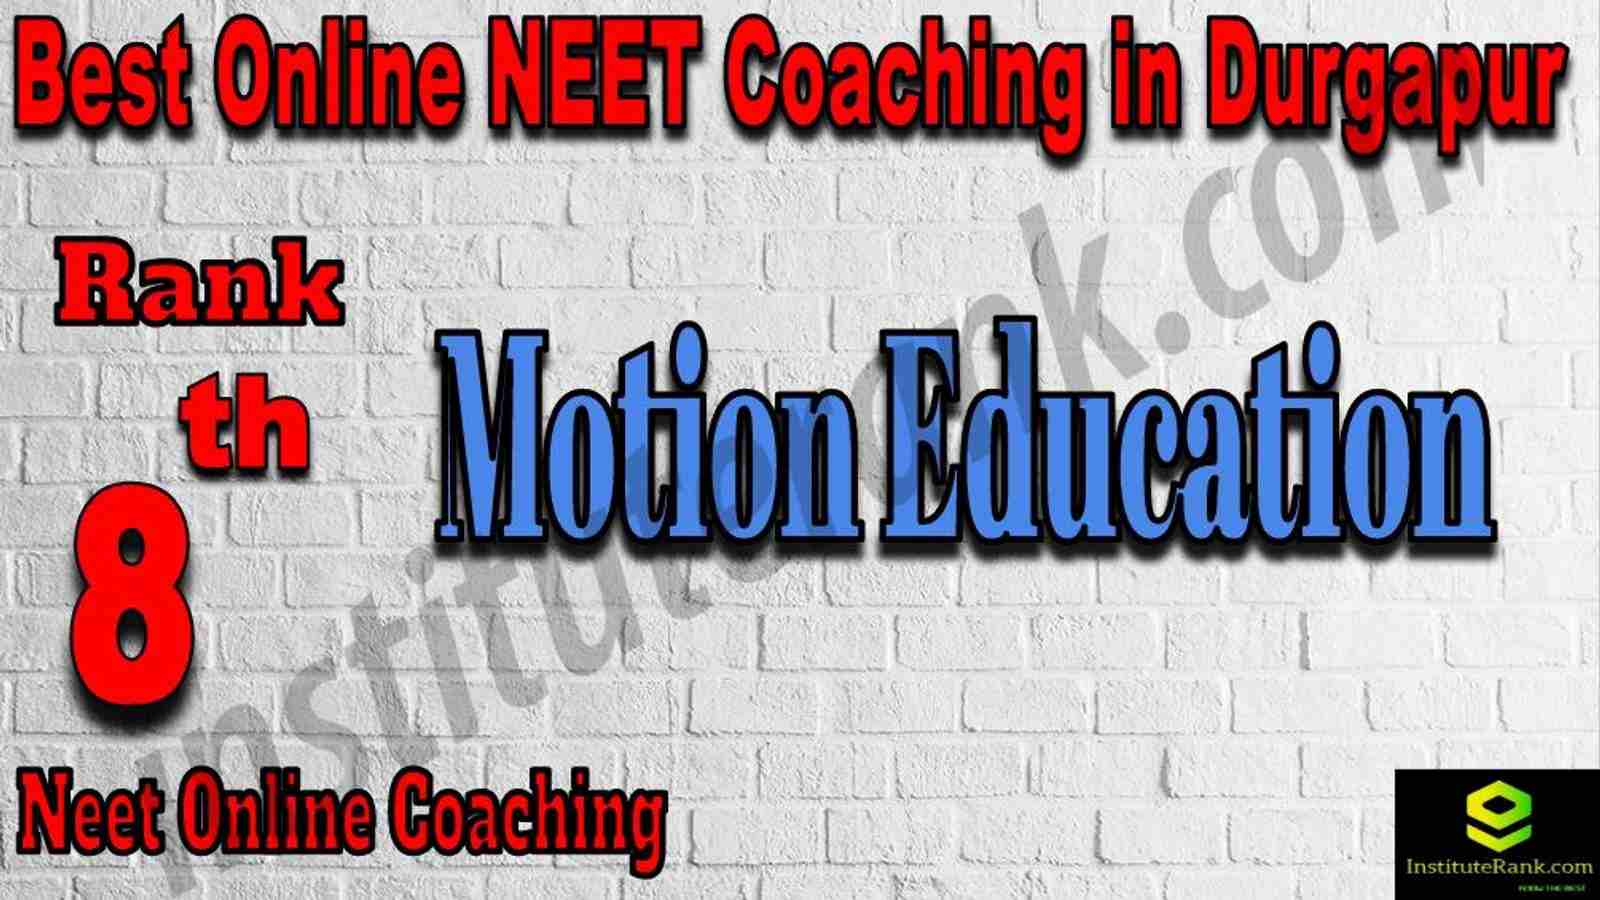 8th Best Online Neet Coaching in Durgapur